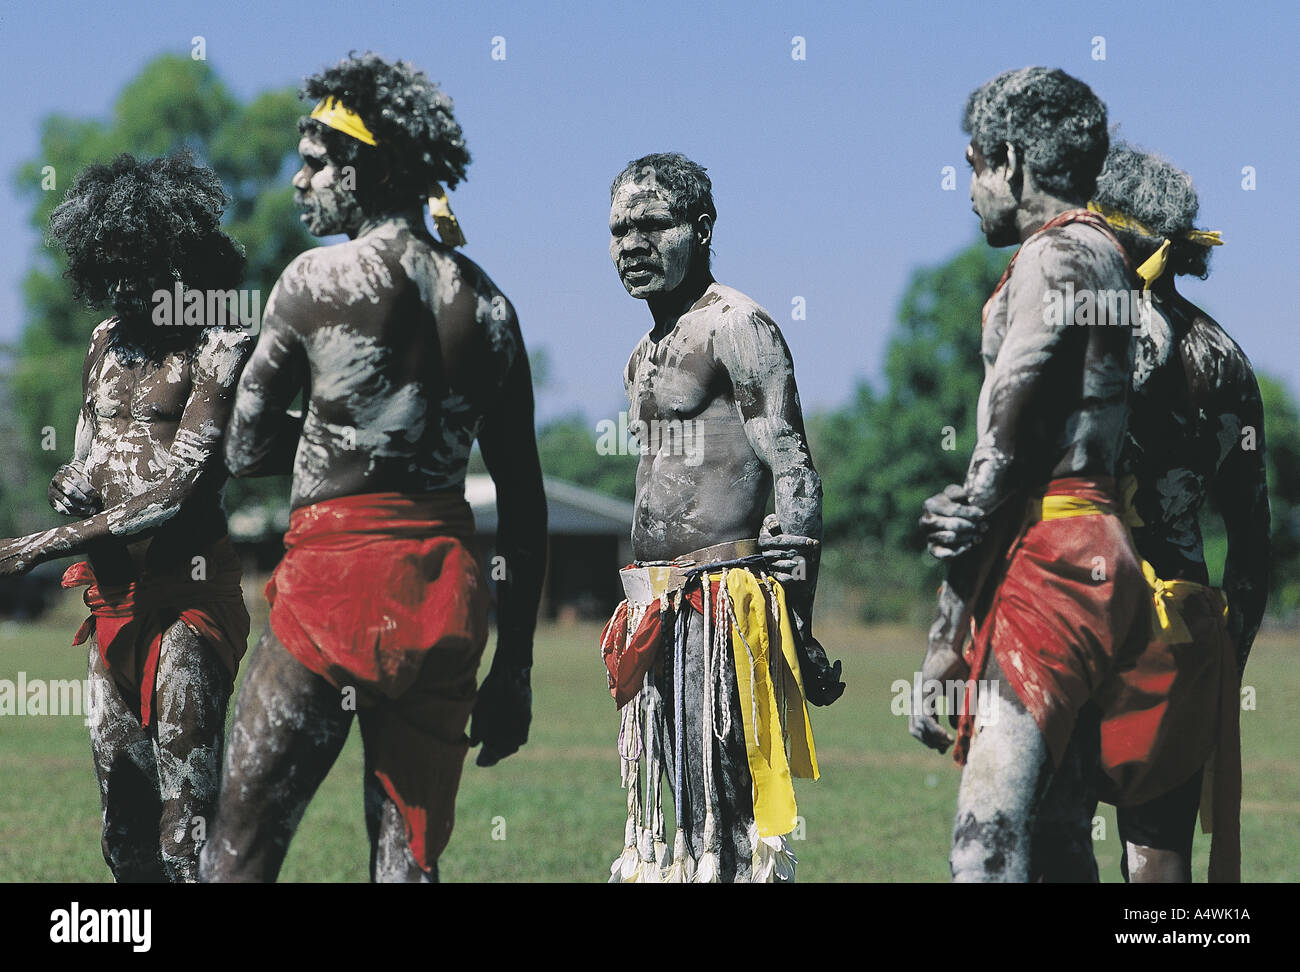 Aboriginal ritual dance in Arnhemland Australia Stock Photo